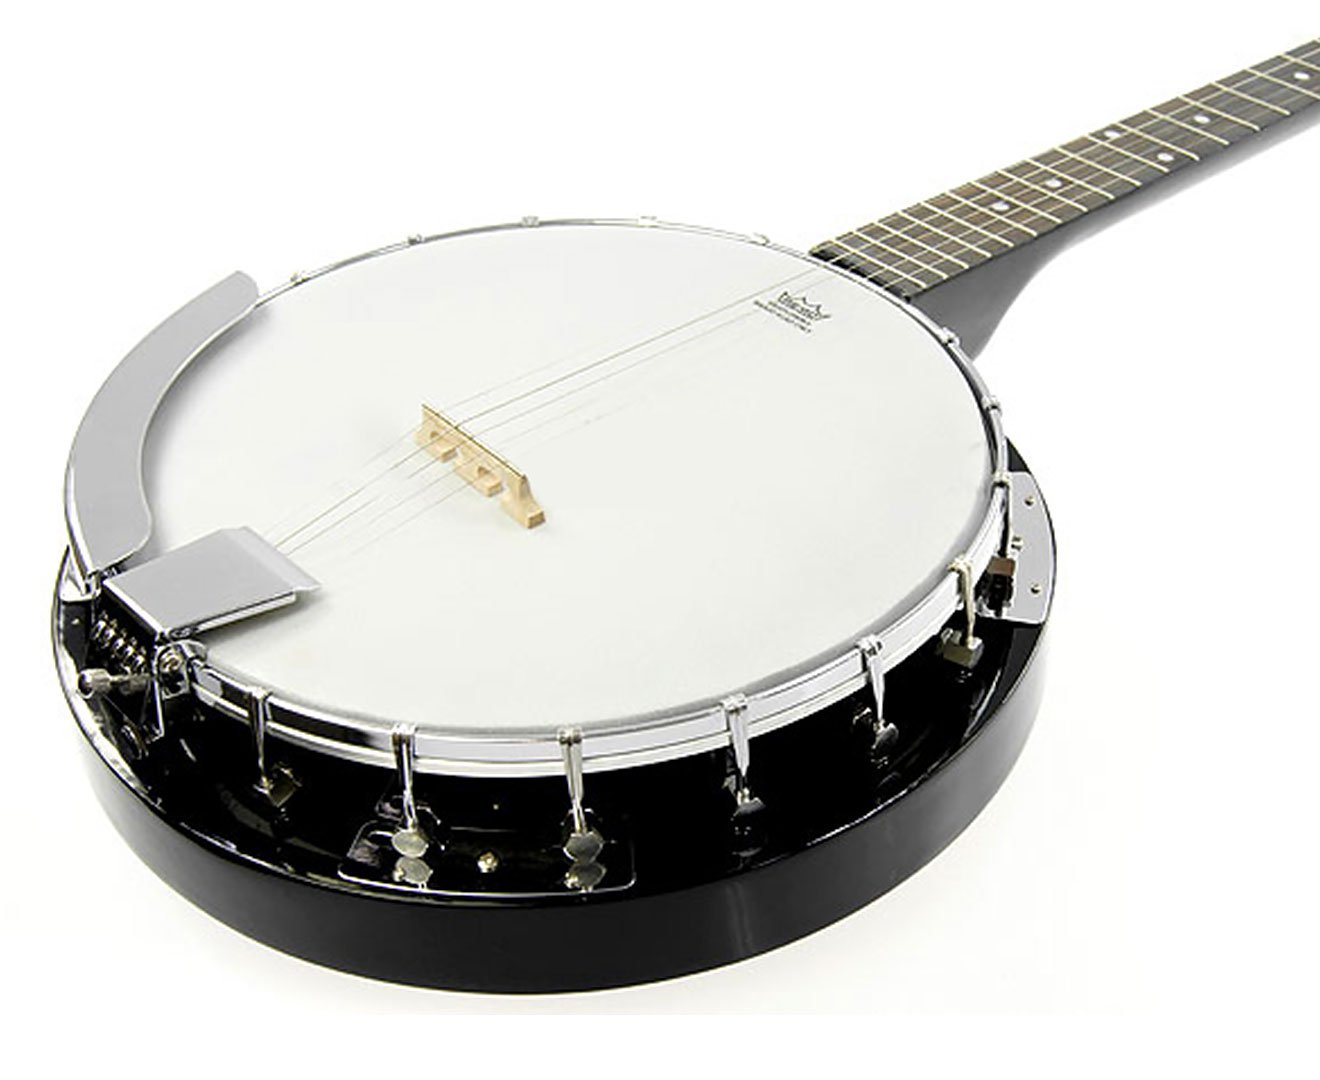 Karrera 5 String Resonator Banjo - Black - SILBERSHELL